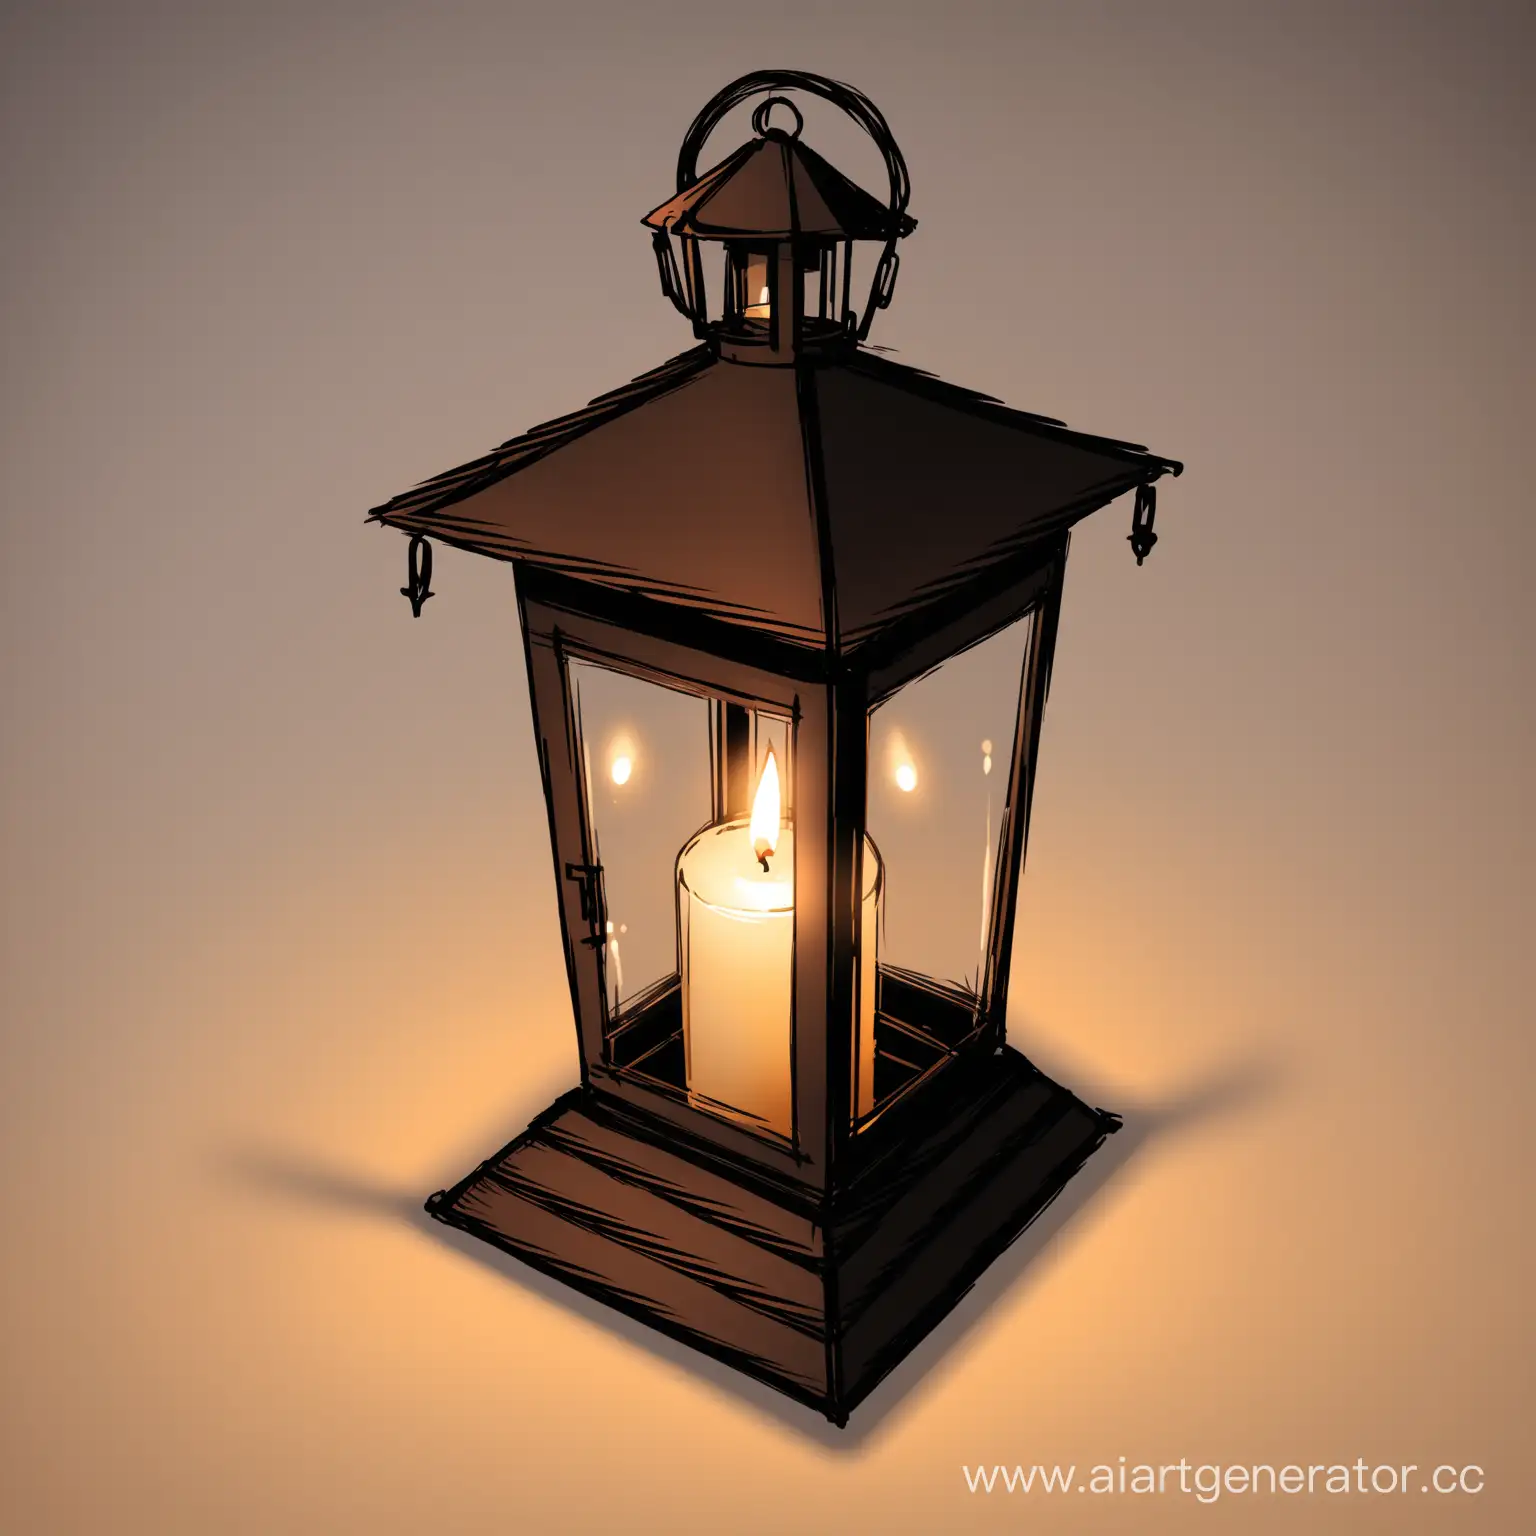 SharpAngled-Lantern-Illuminated-by-Candlelight